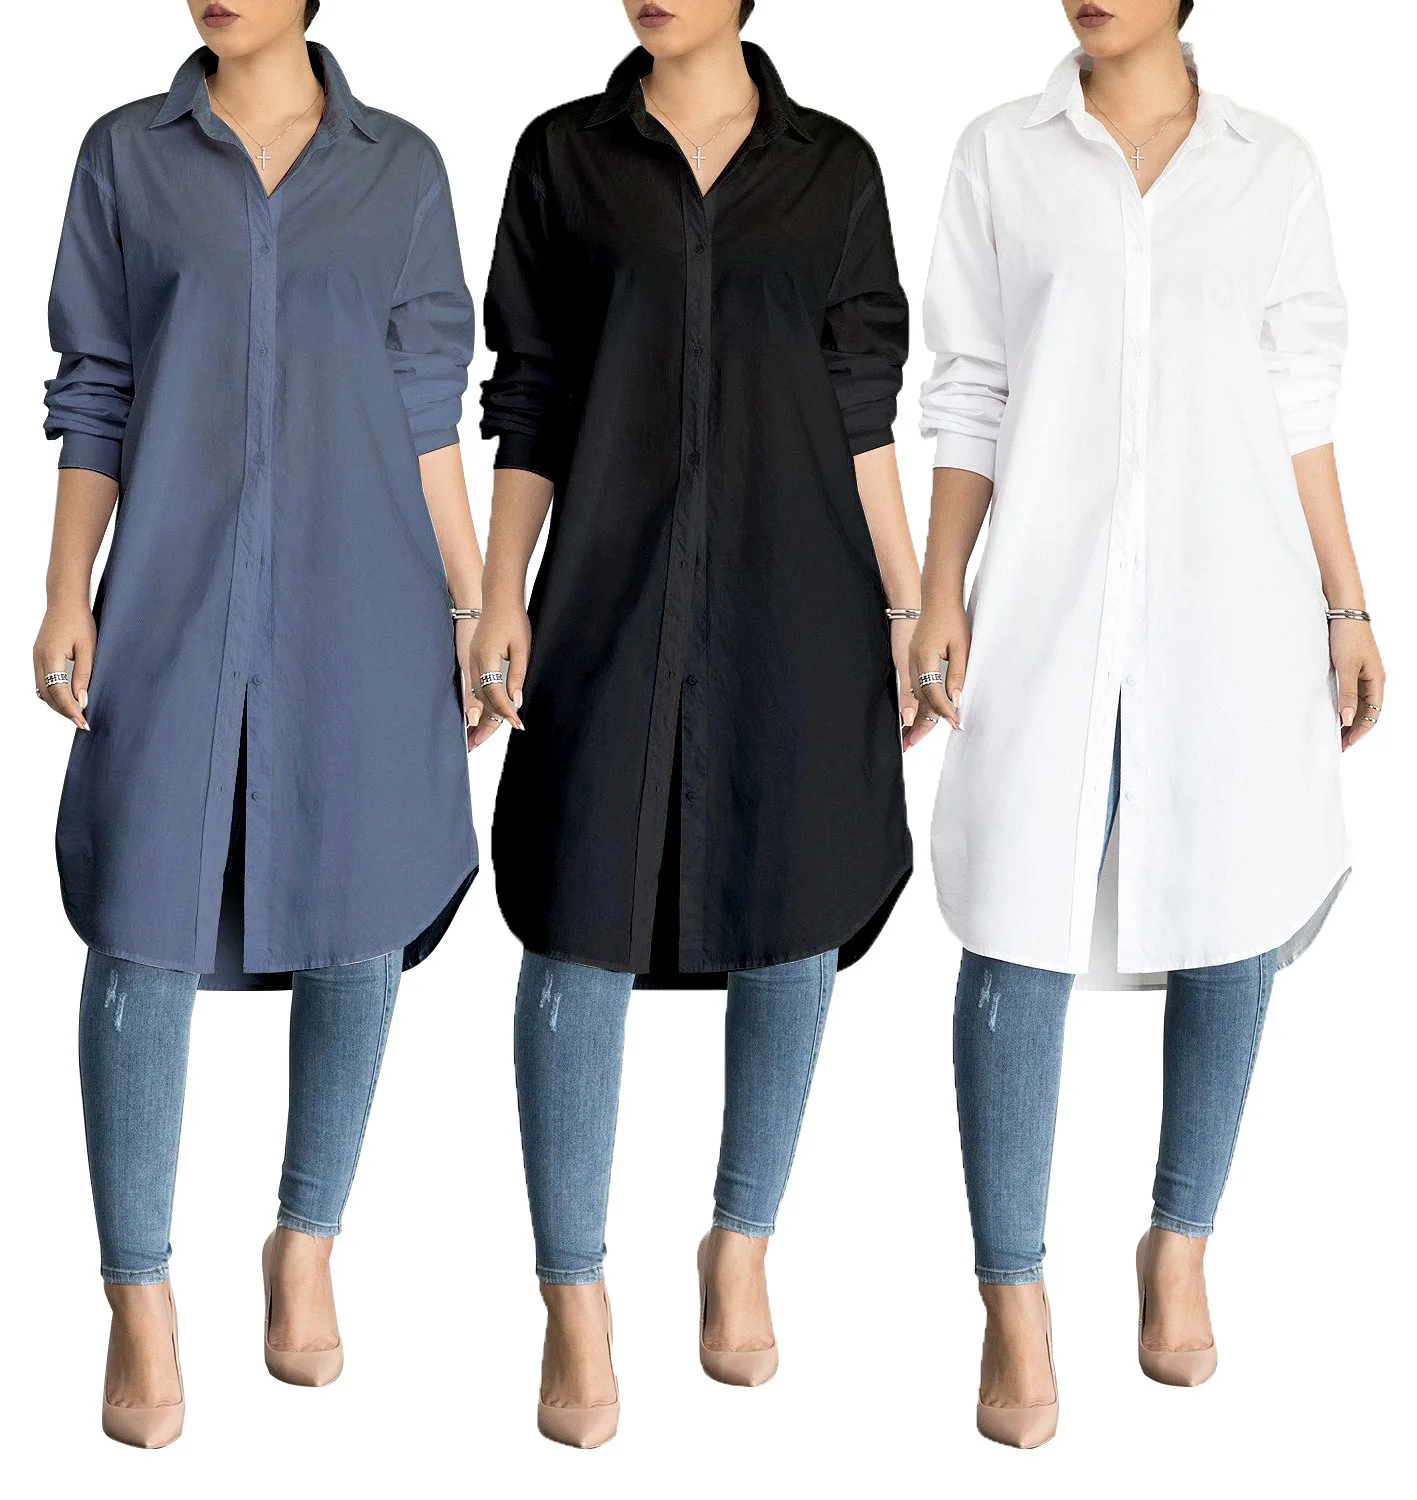 Women's Long Sleeve Knee Length Shirt Solid Color Long Line Shirt Dress White Black Long Shirt Button Up Ladies Blouse